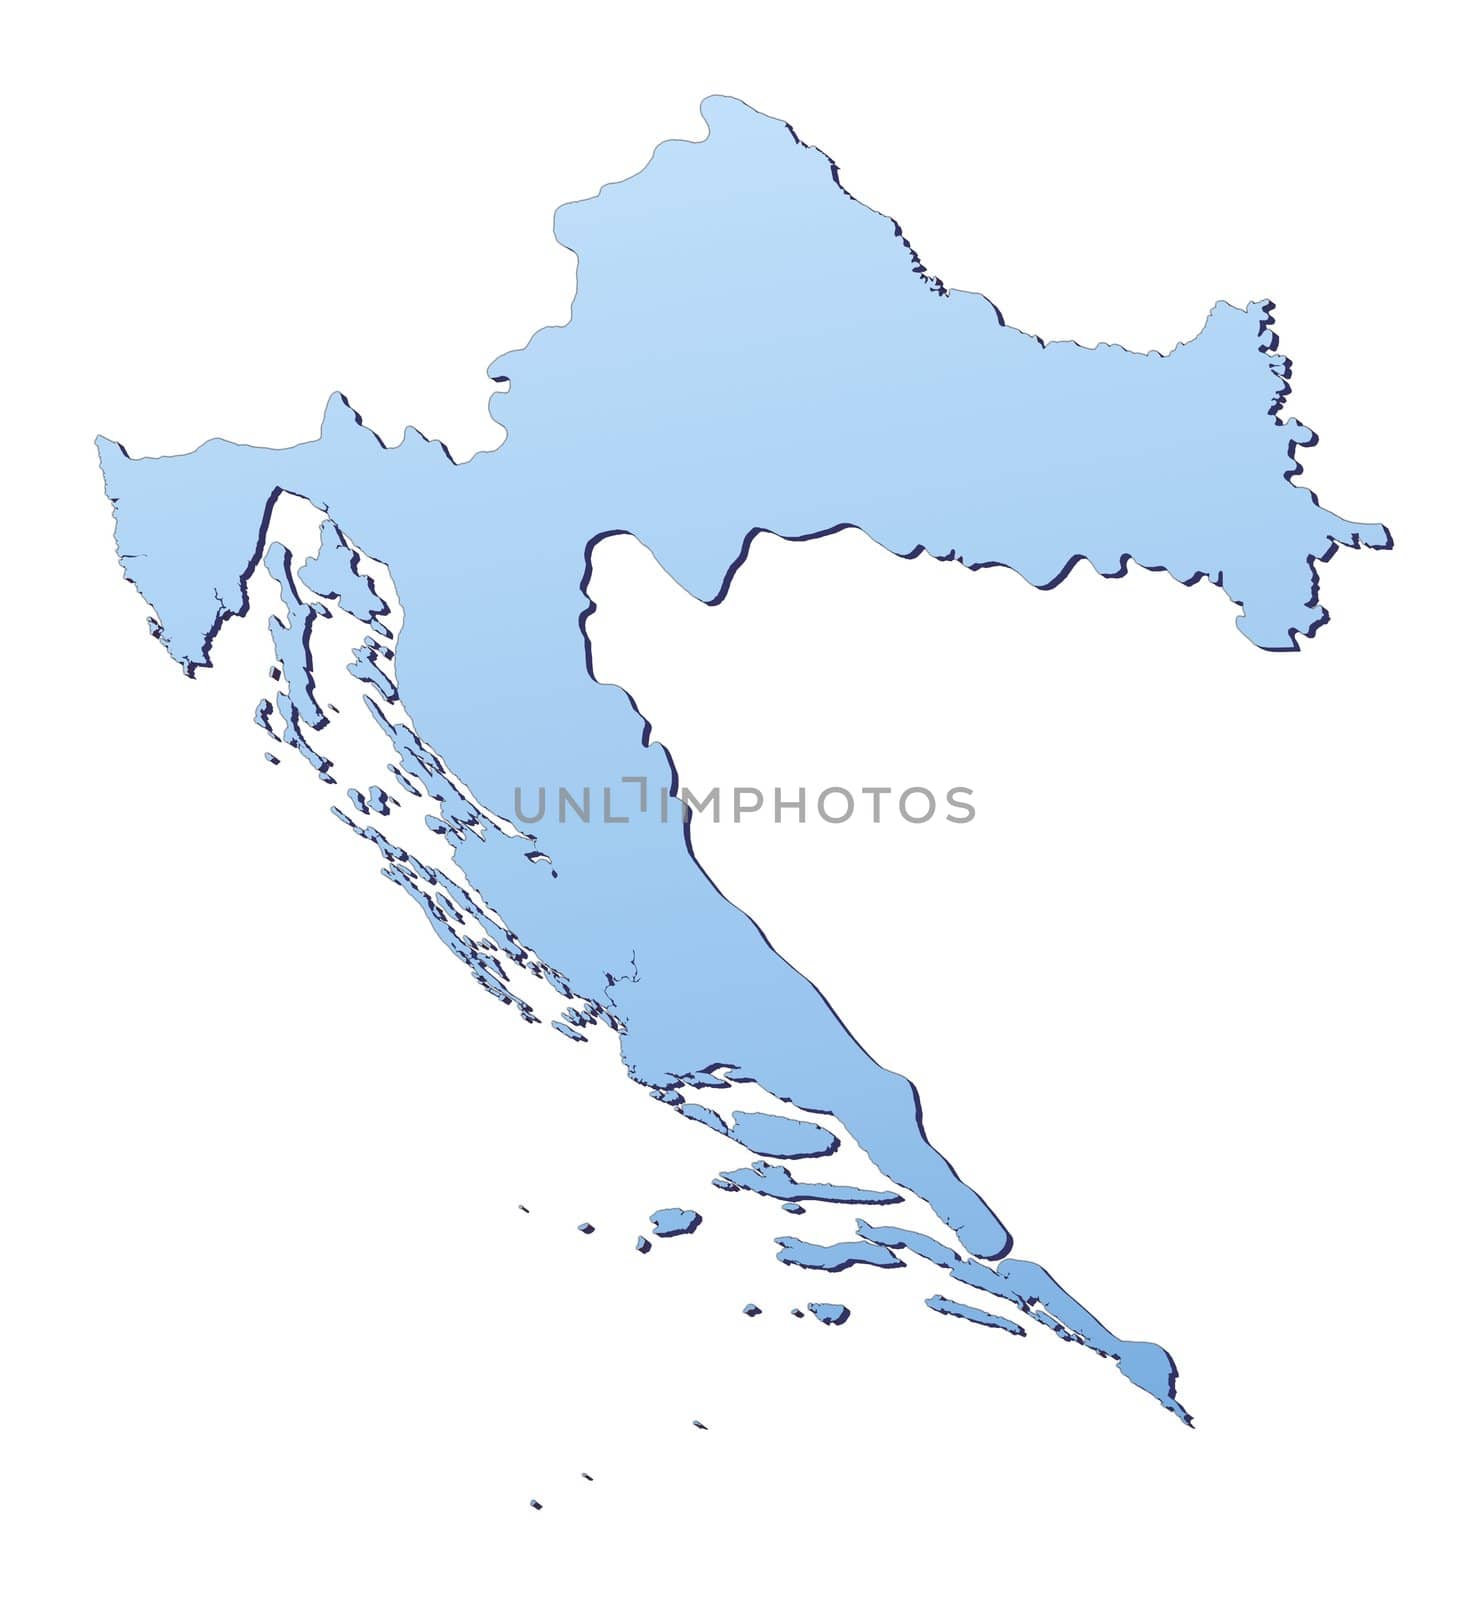 Croatia map by skvoor